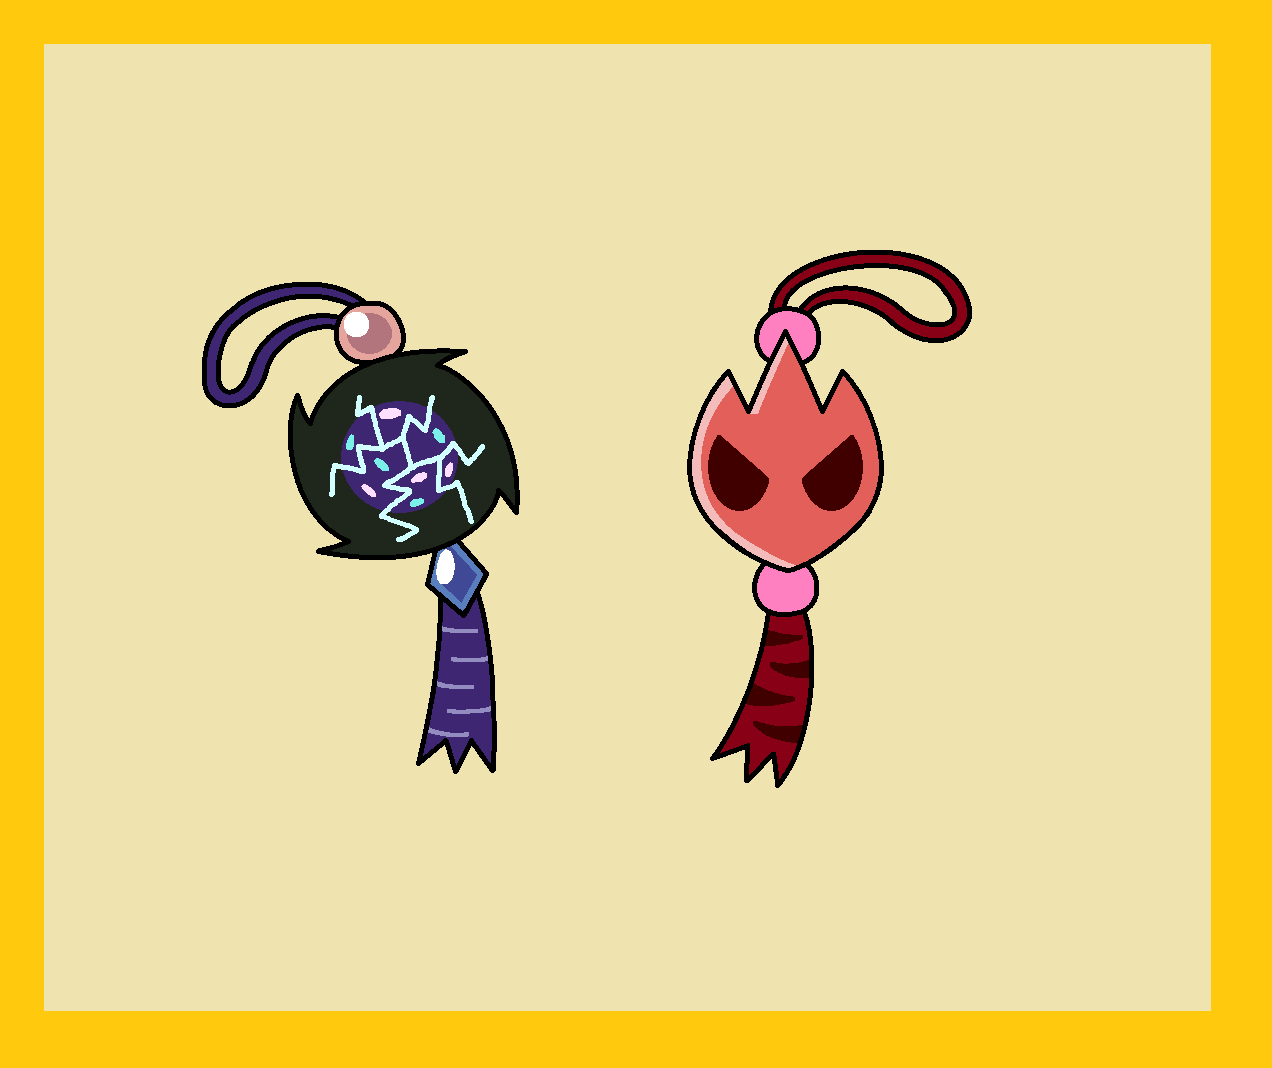 Spoilers] Nightmare King Grimm as a Pokémon. : r/HollowKnight